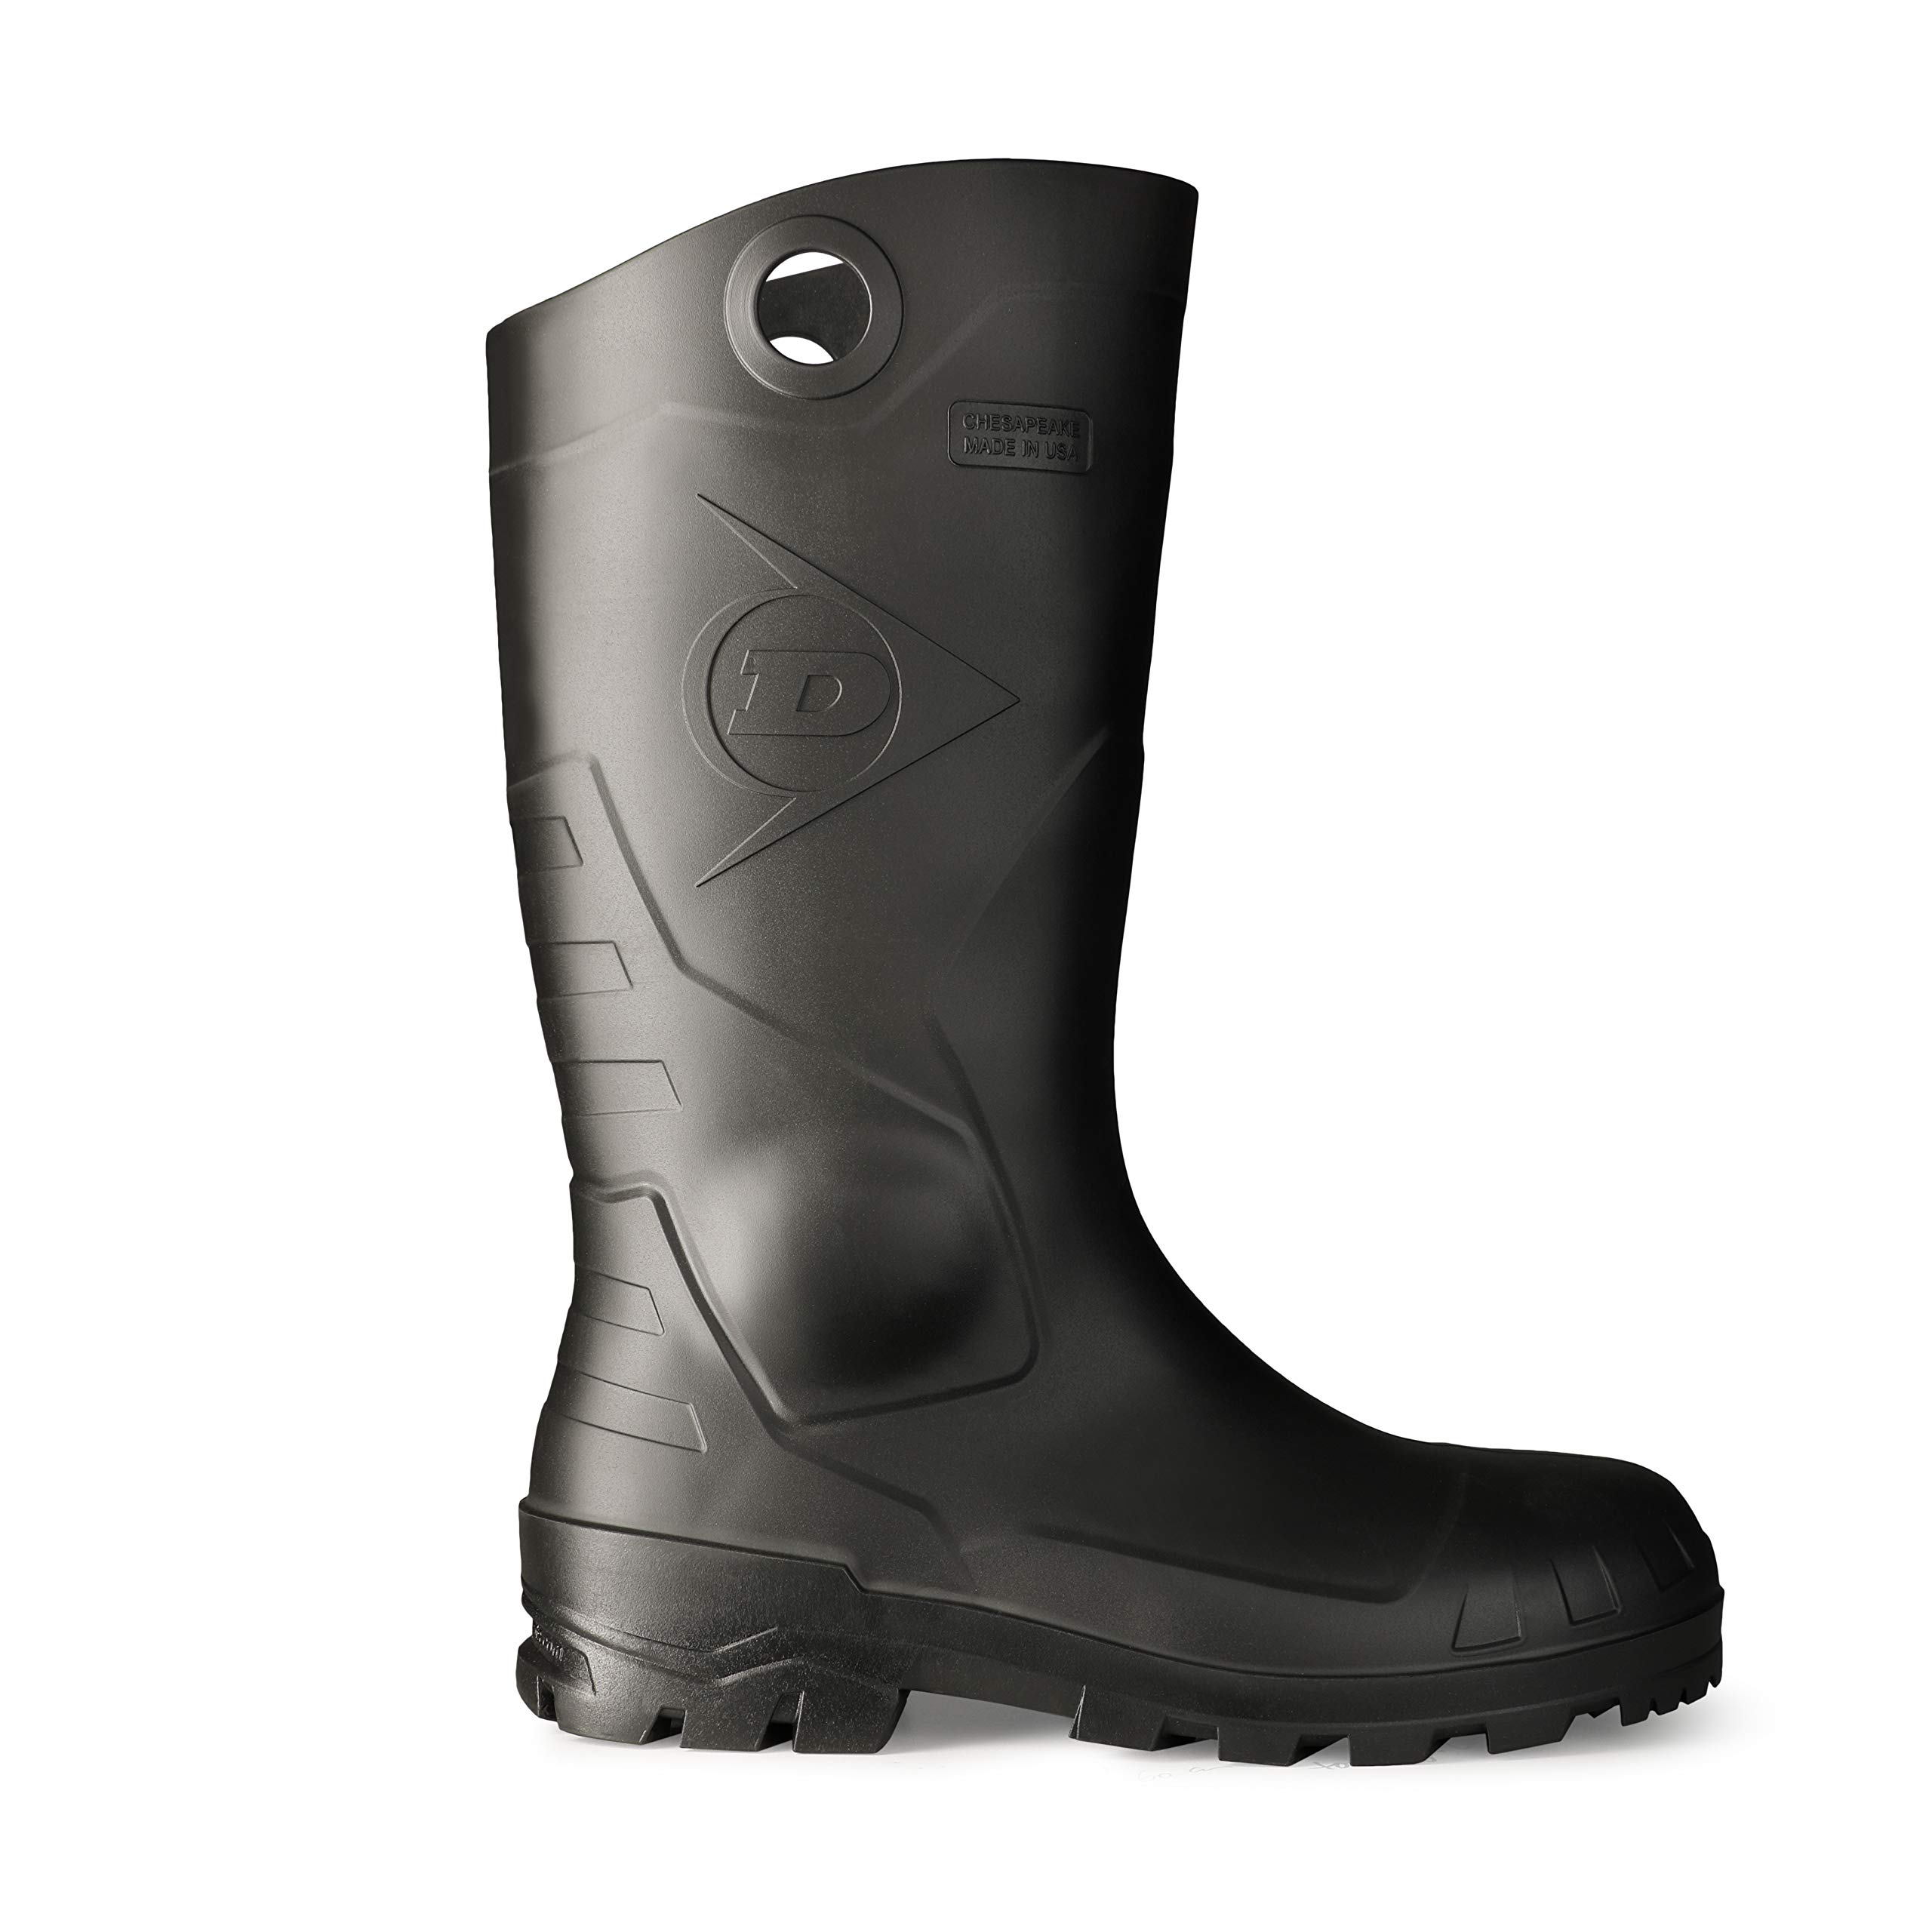 Dunlop Protective Footwear,Chesapeake steel toe Black Amazon, 100% Waterproof PVC, Lightweight and Durable8677677.07, Size 7 US